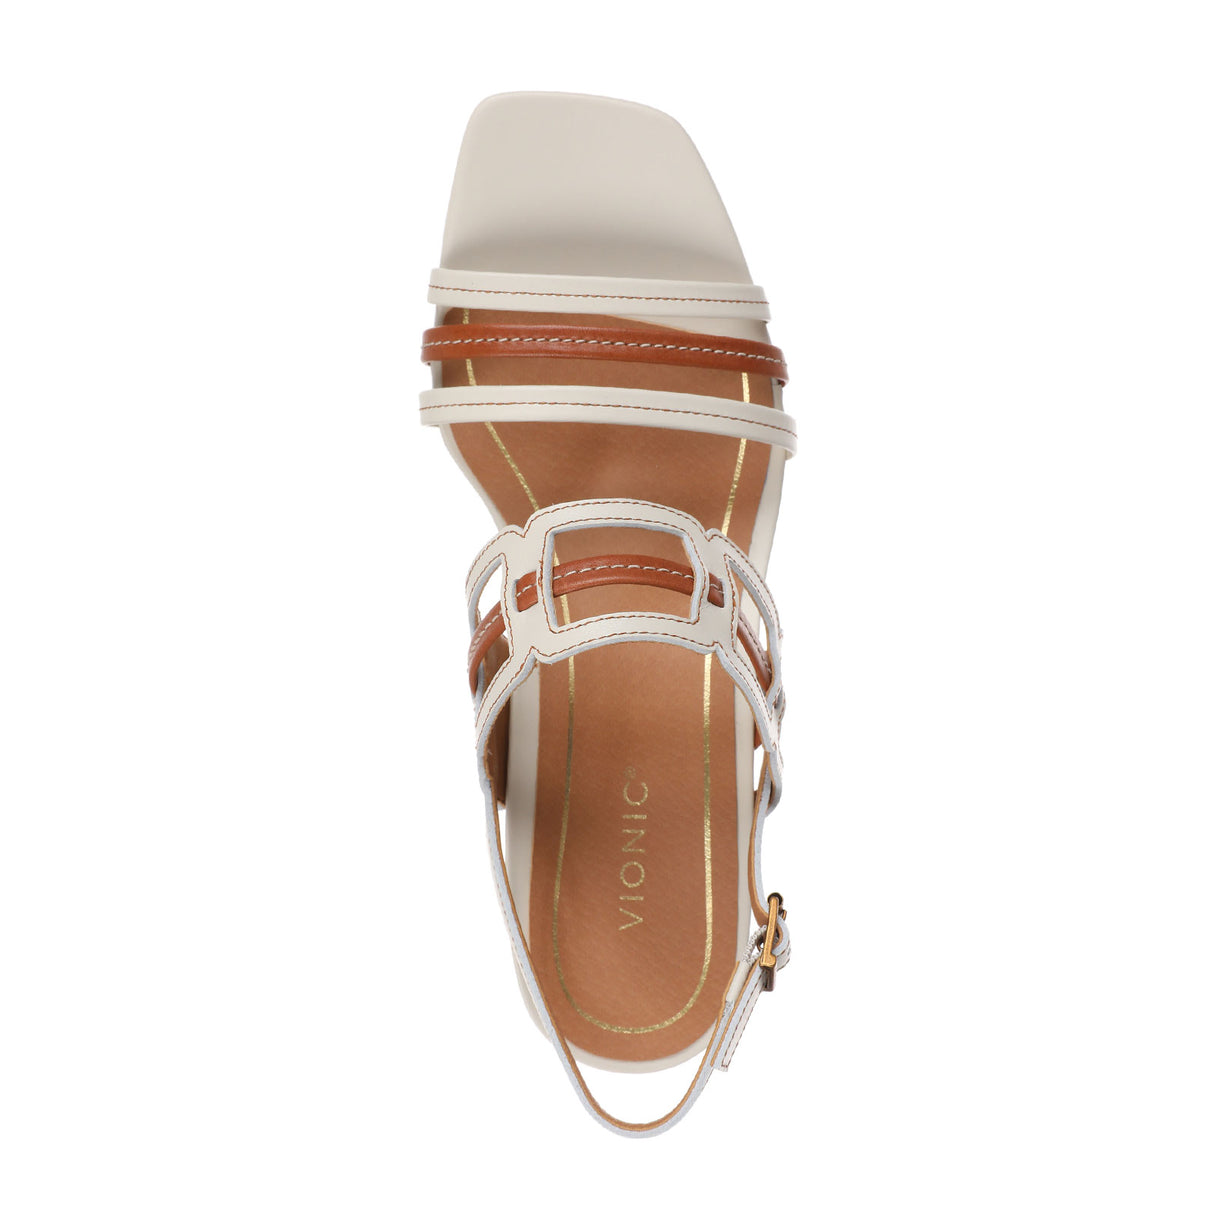 Vionic Zaphira Heeled Sandal (Women) - Cream Sandals - Heeled - The Heel Shoe Fitters